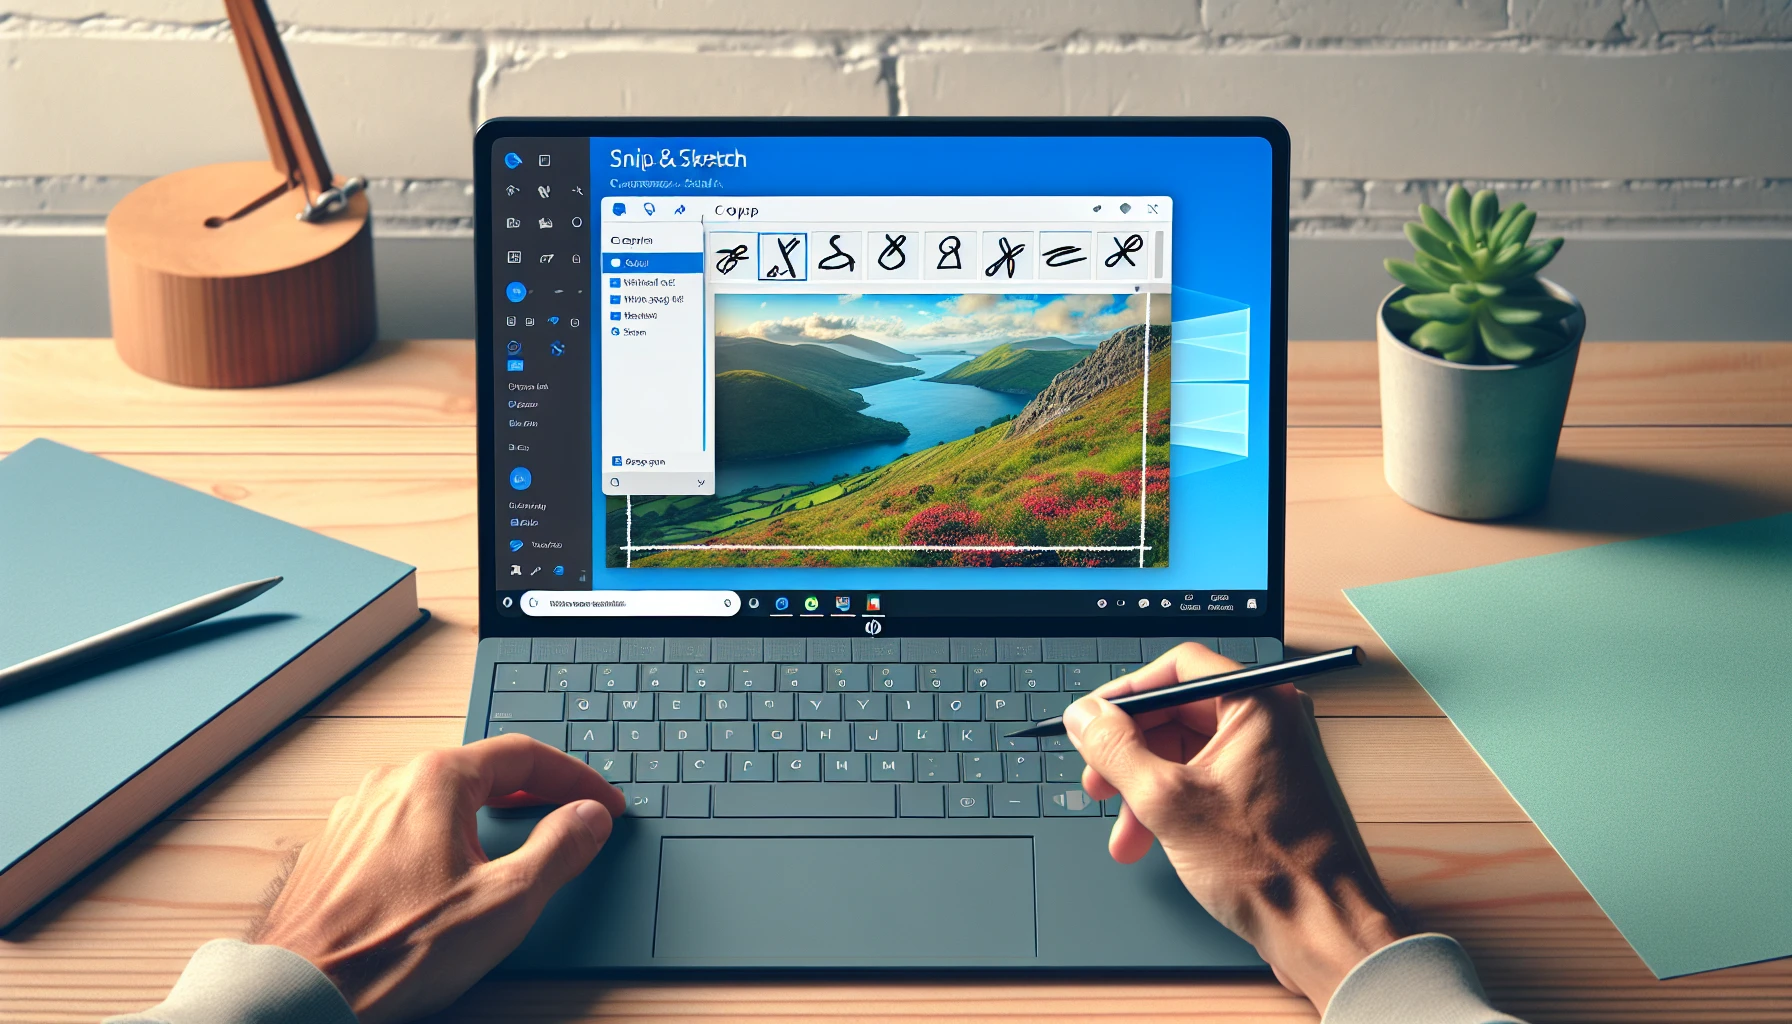 Illustration of the Snip & Sketch app on a Windows 10 HP laptop